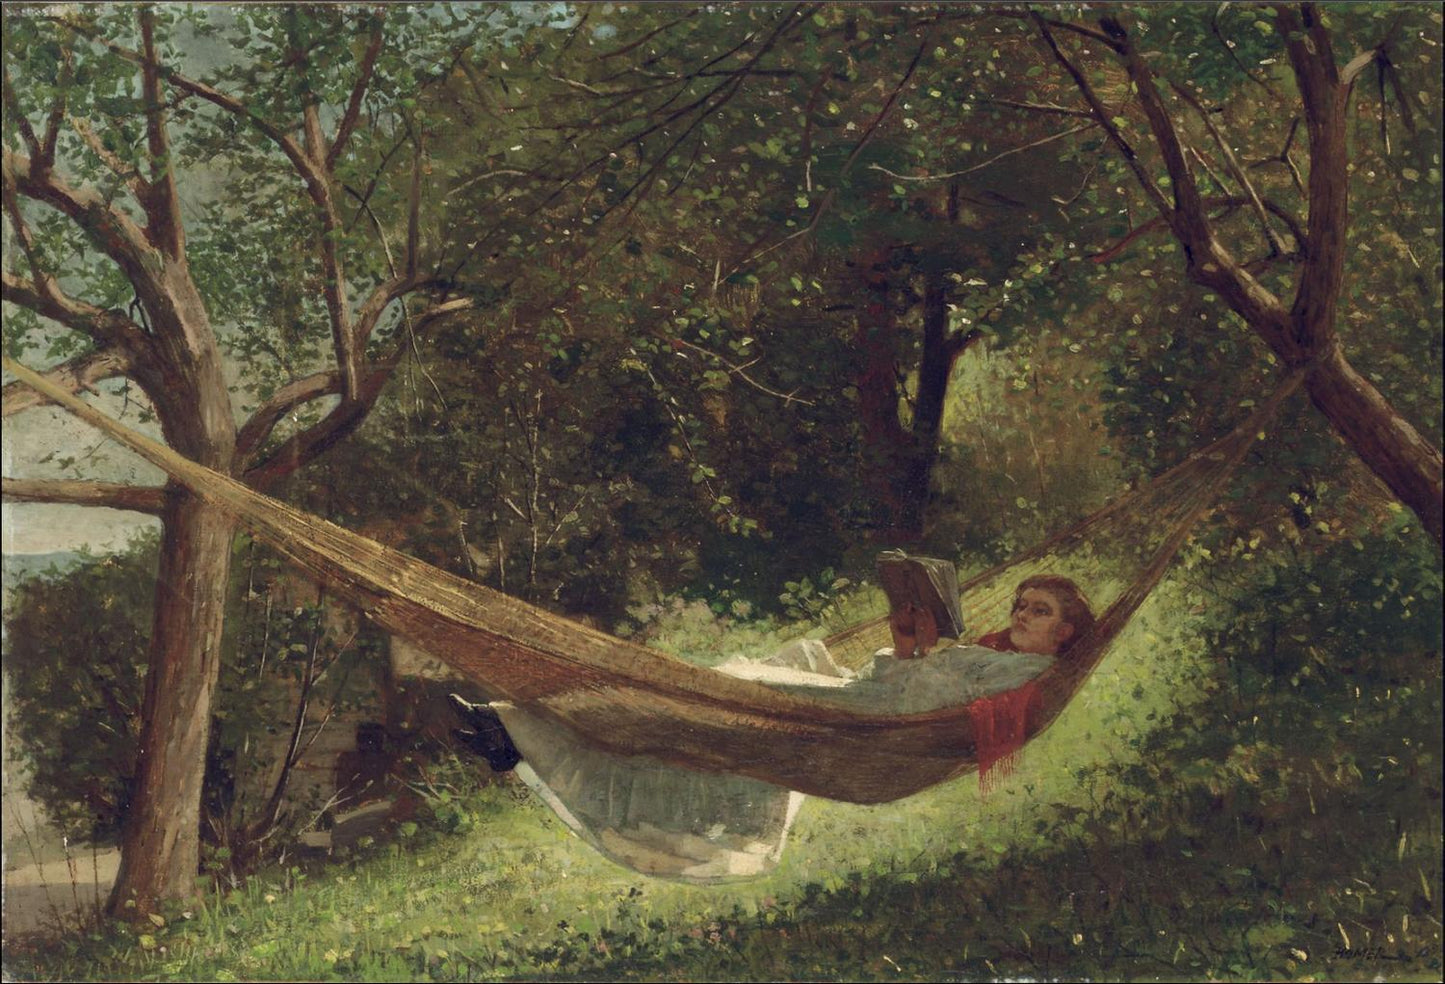 Girl in the Hammock, 1873, Winslow Homer